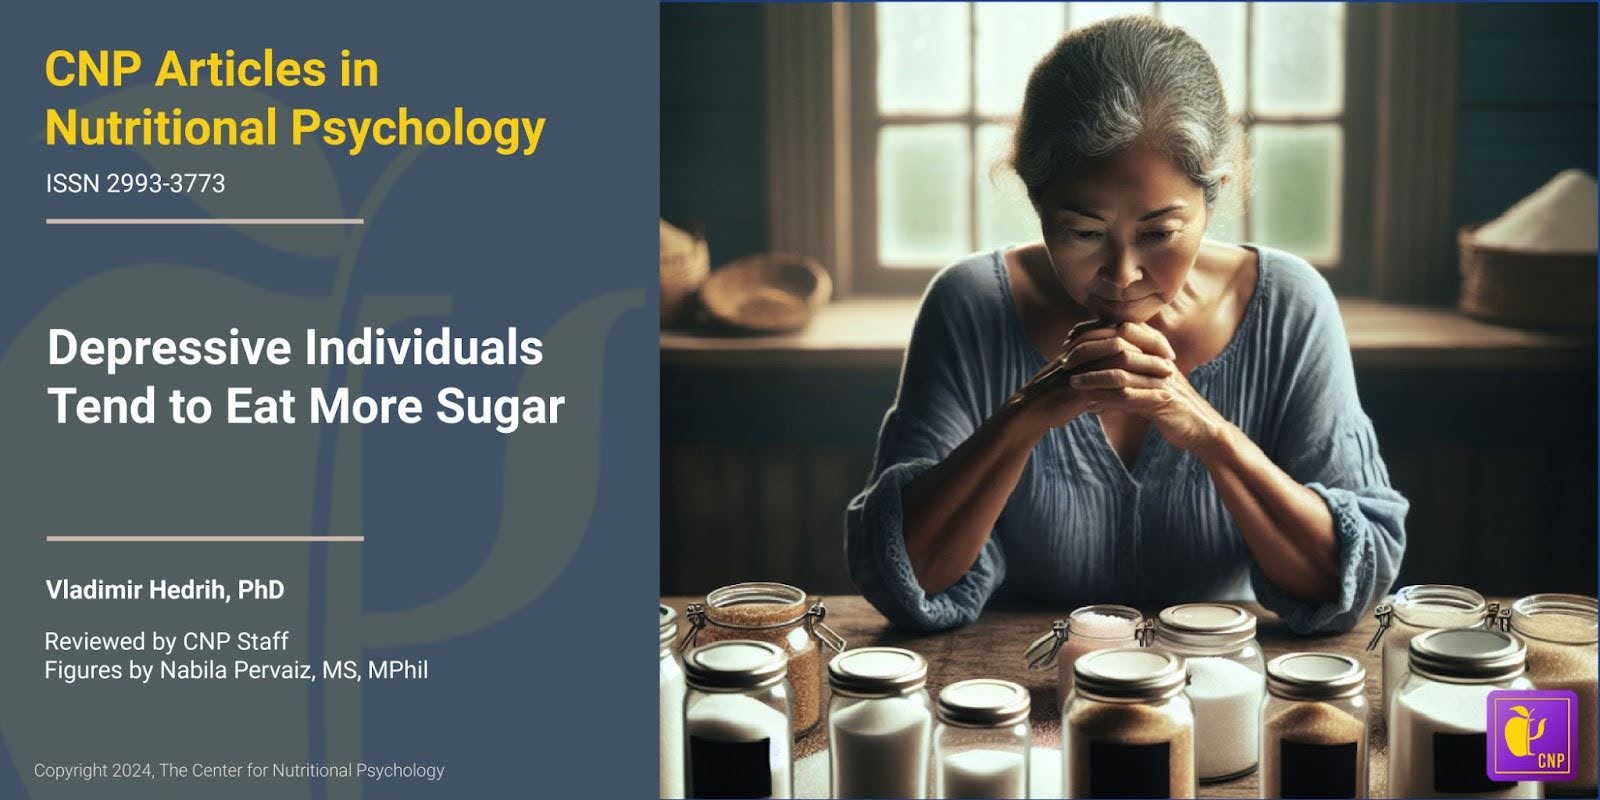 depressive individuals tend to eat more sugar